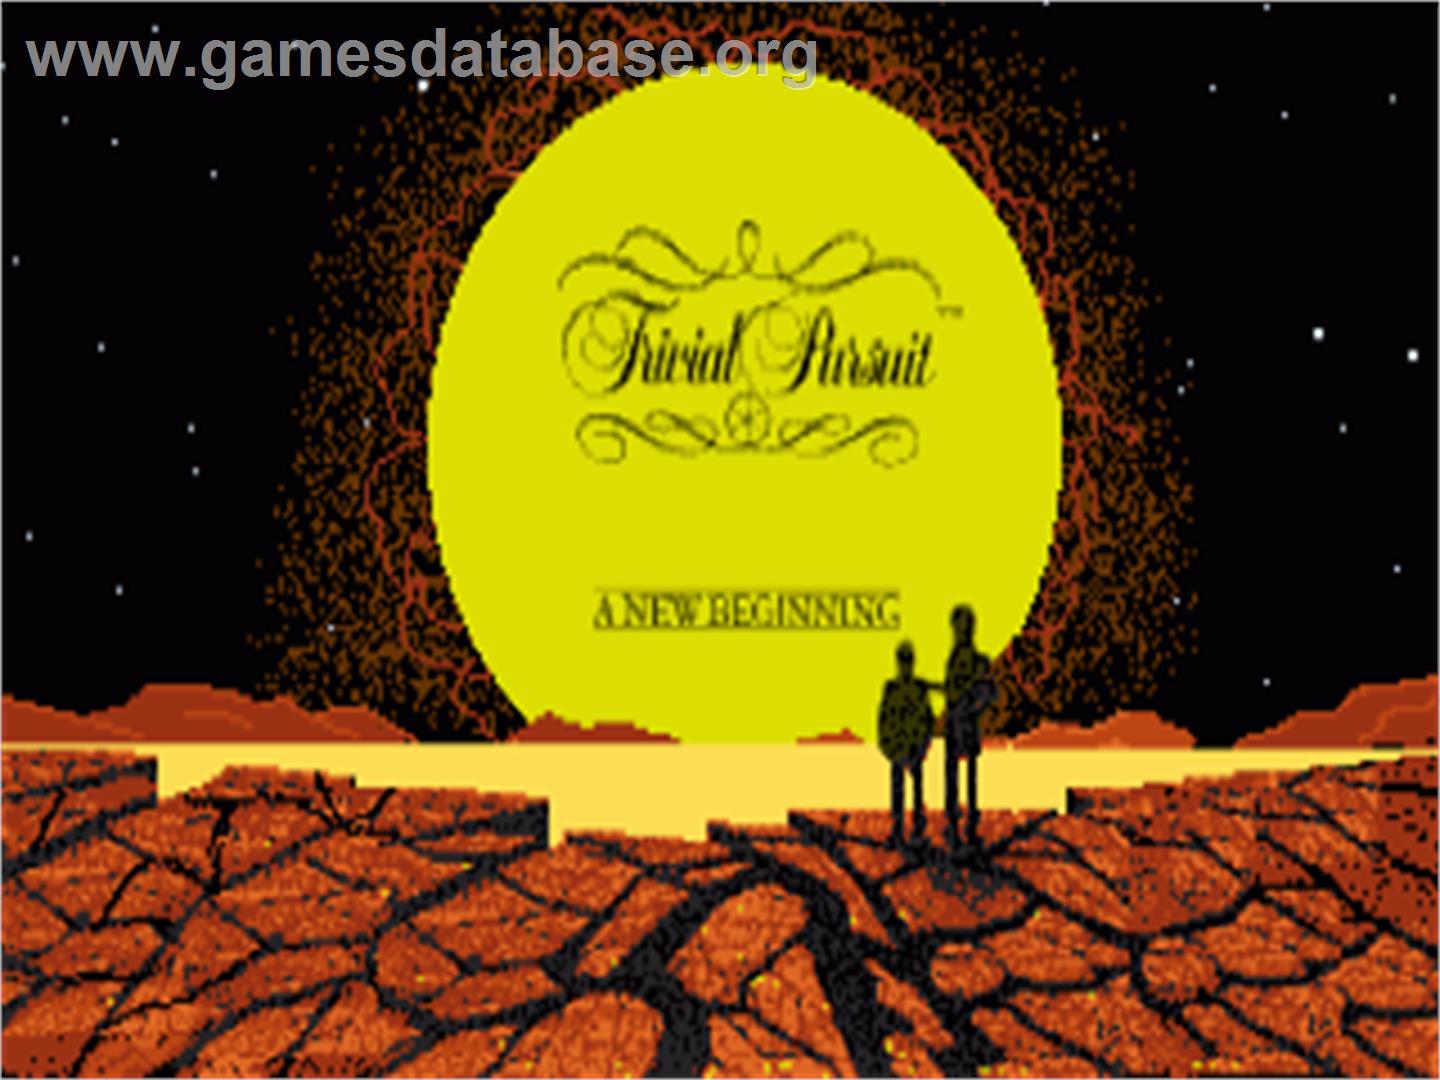 Trivial Pursuit: A New Beginning - Commodore Amiga - Artwork - Title Screen